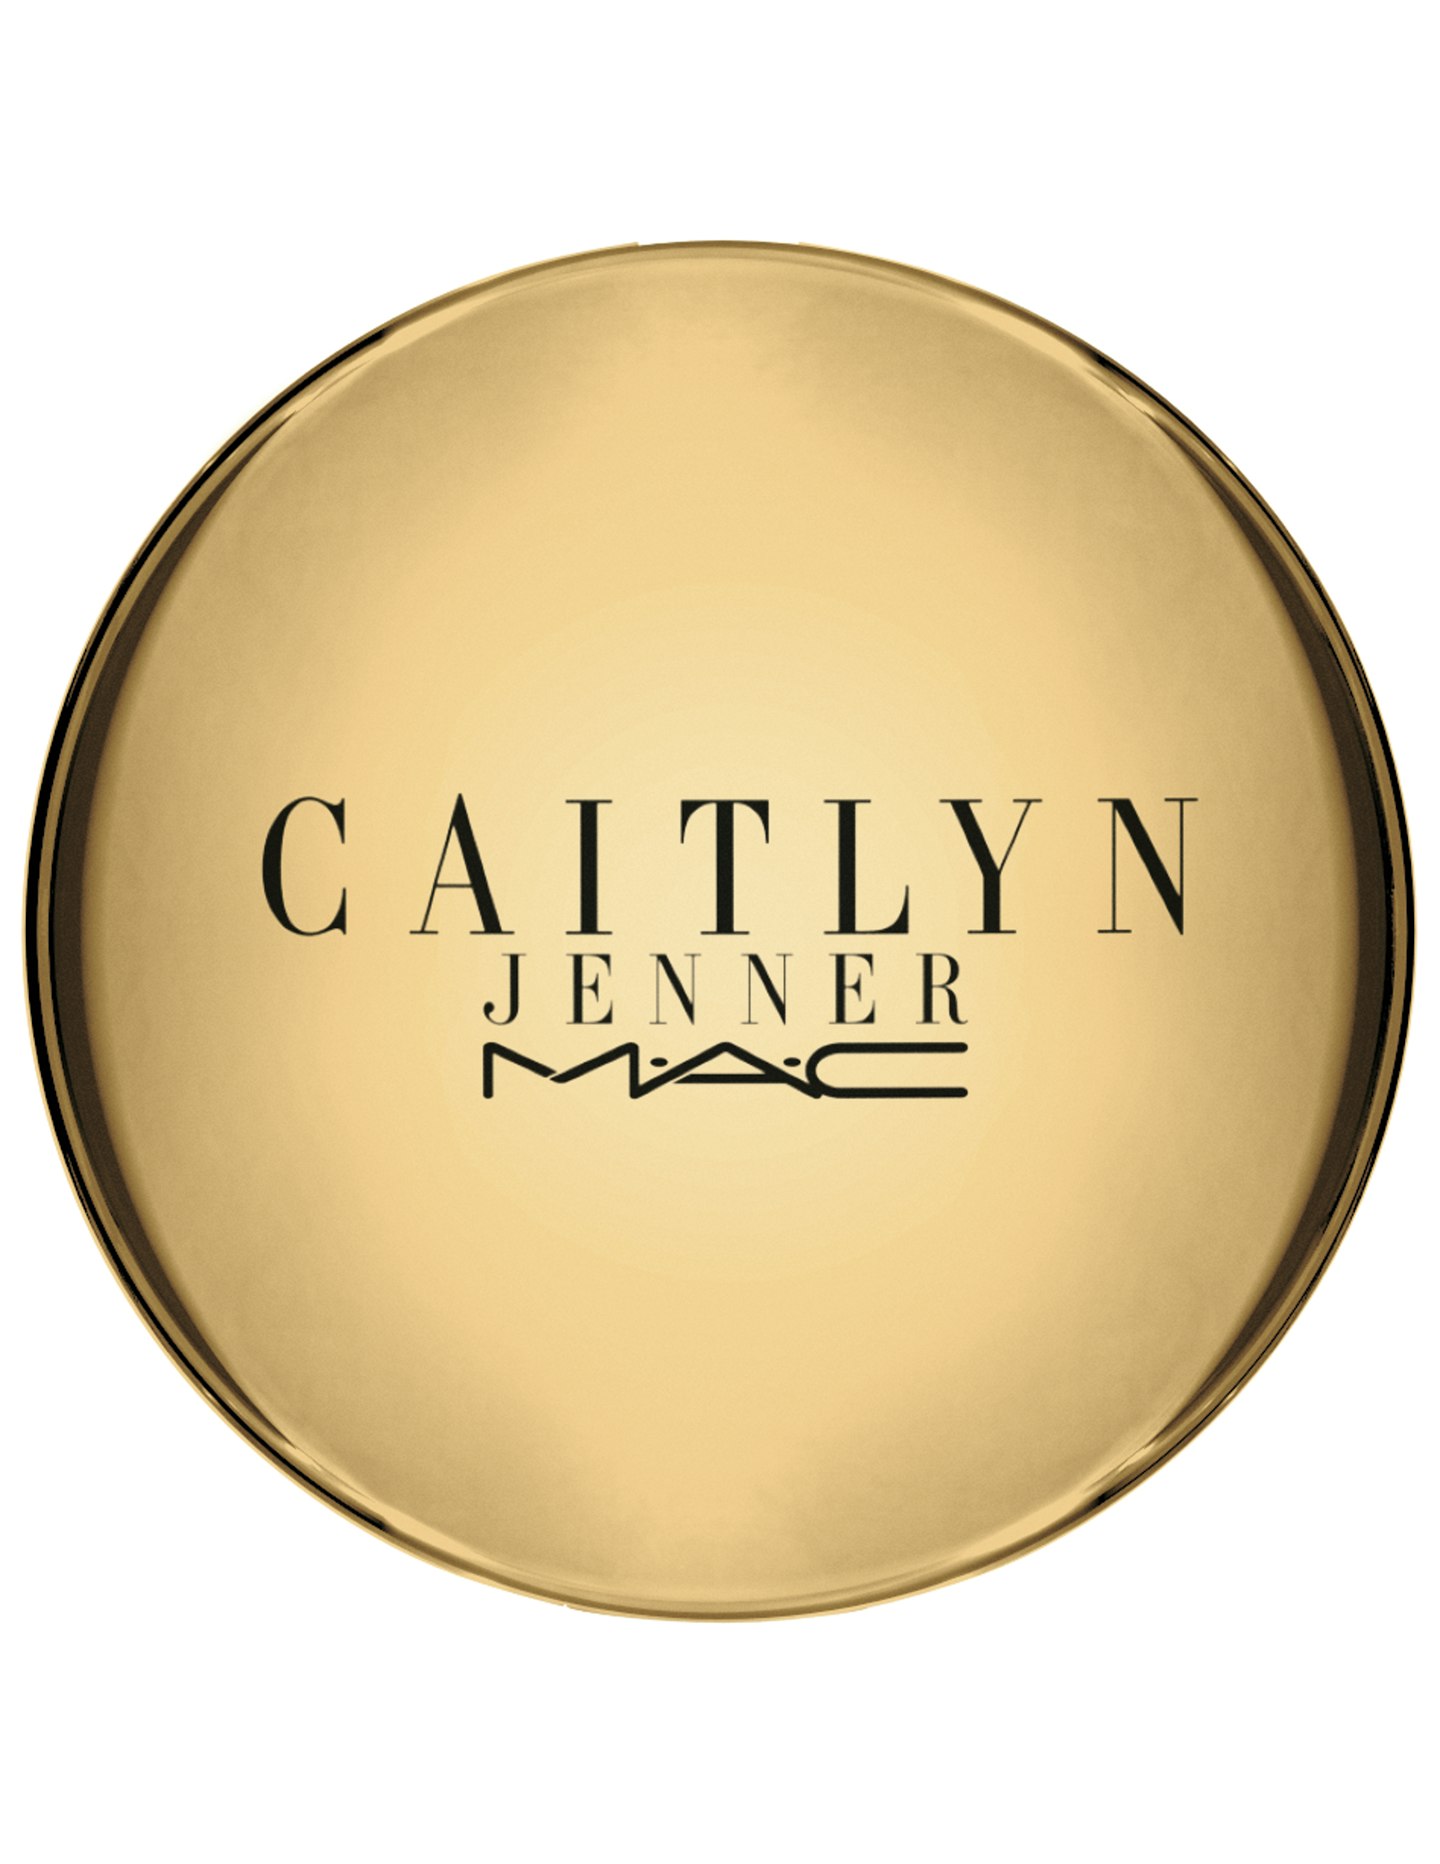 Caitlyn Jenner / MAC collaboration